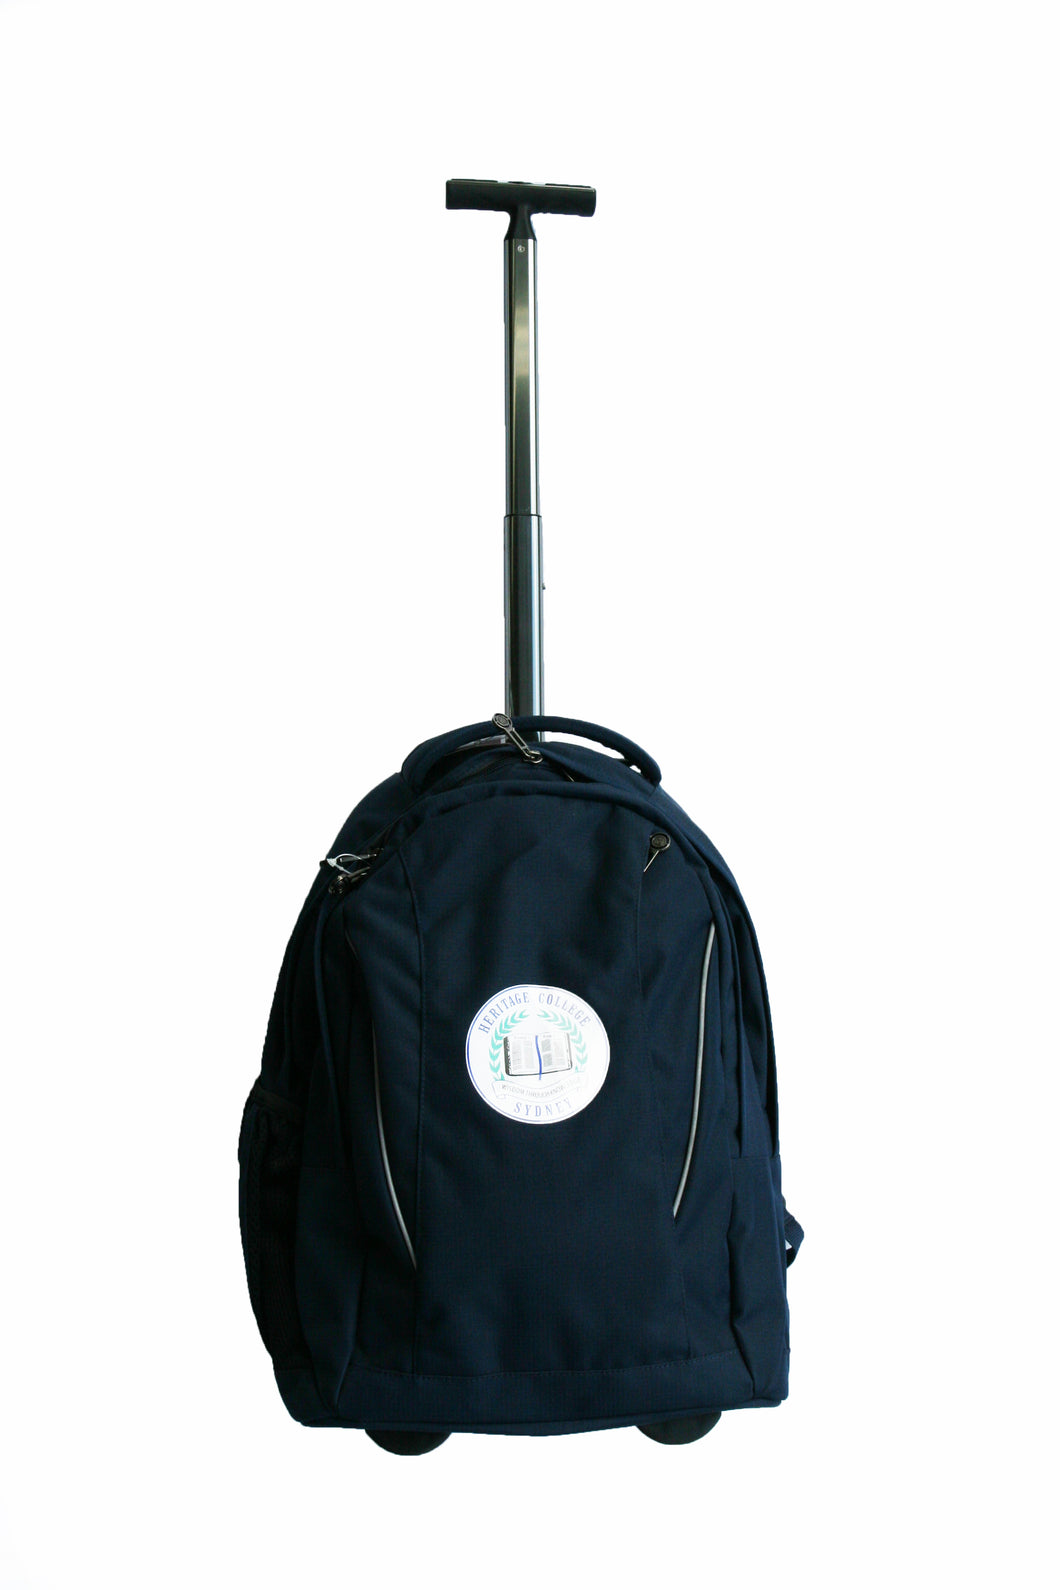 College Roller Bag - 40L Capacity